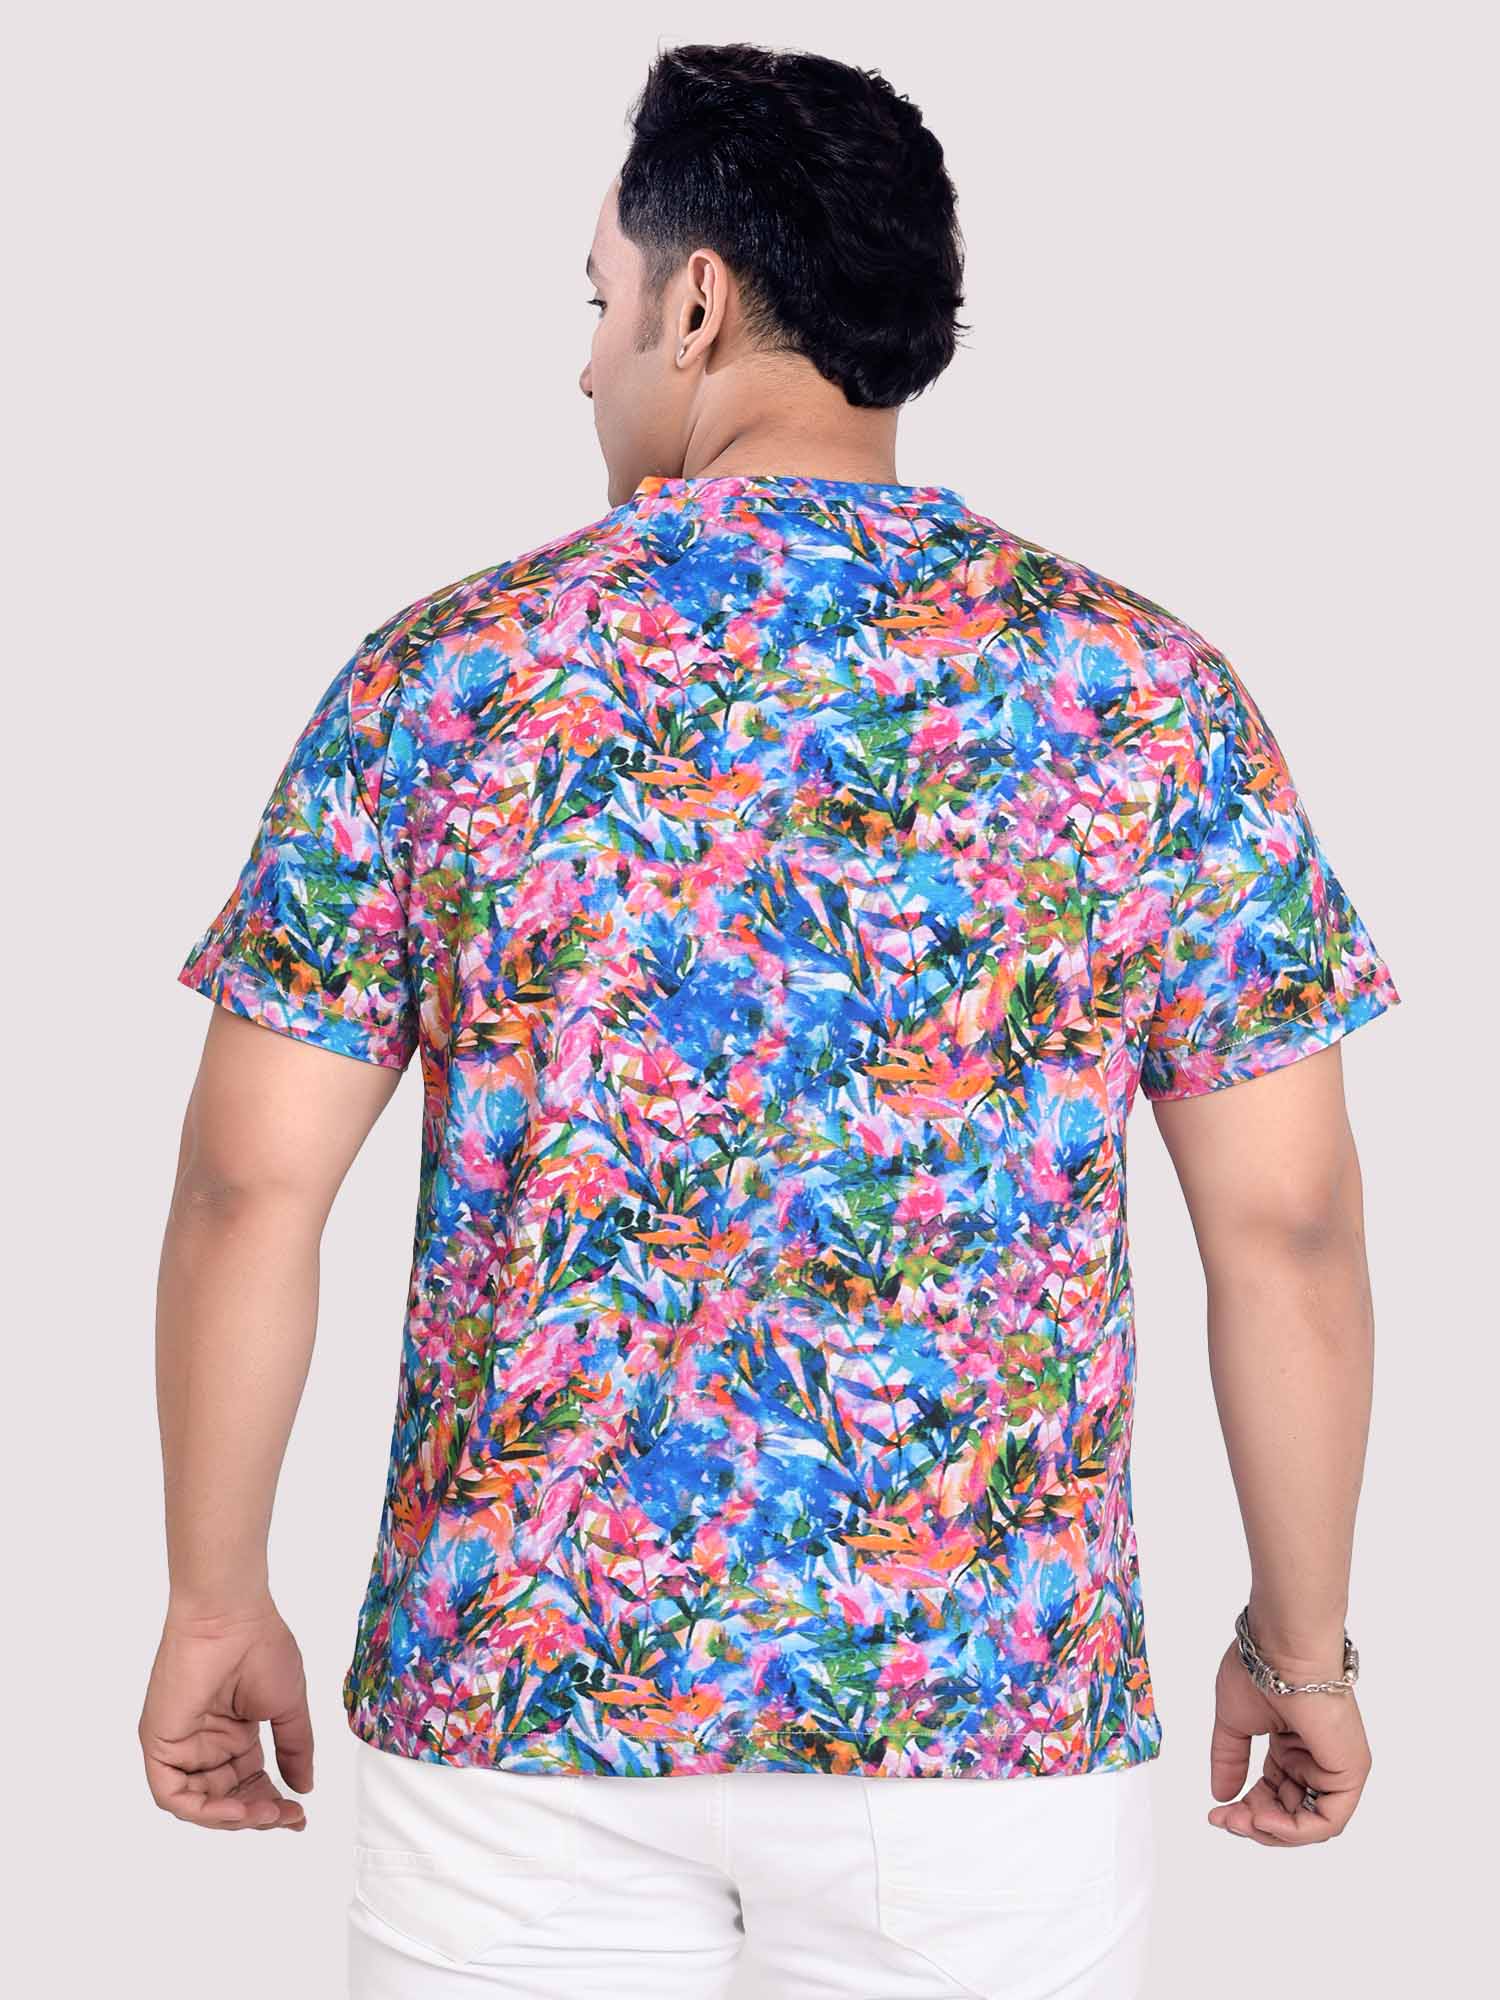 Flower Digital Printed Round Neck T-Shirt Men's Plus Size